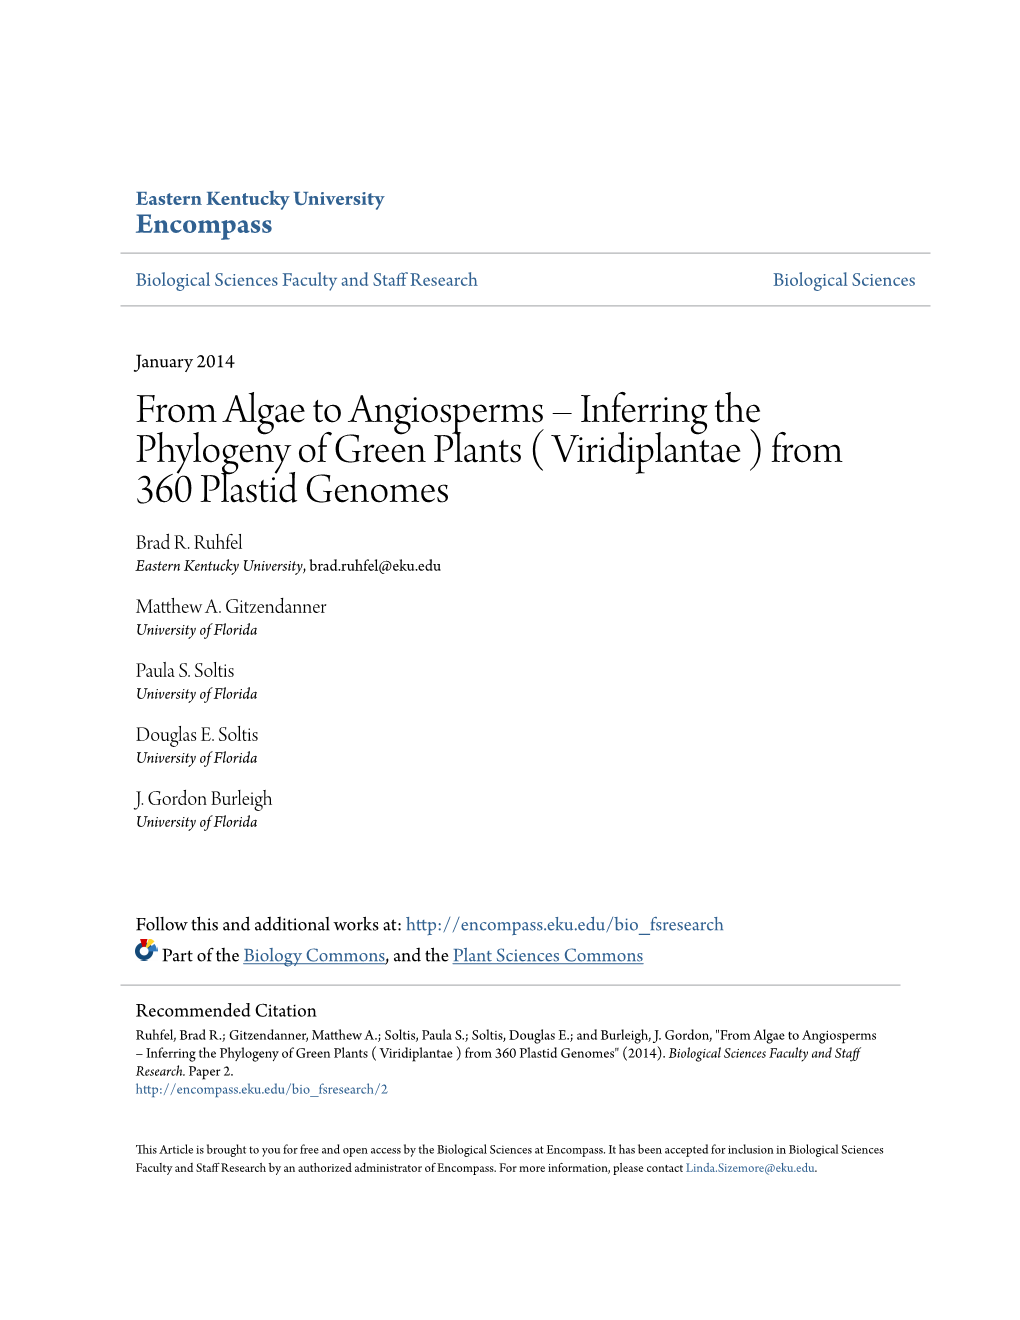 From Algae to Angiosperms – Inferring the Phylogeny of Green Plants ( Viridiplantae ) from 360 Plastid Genomes Brad R